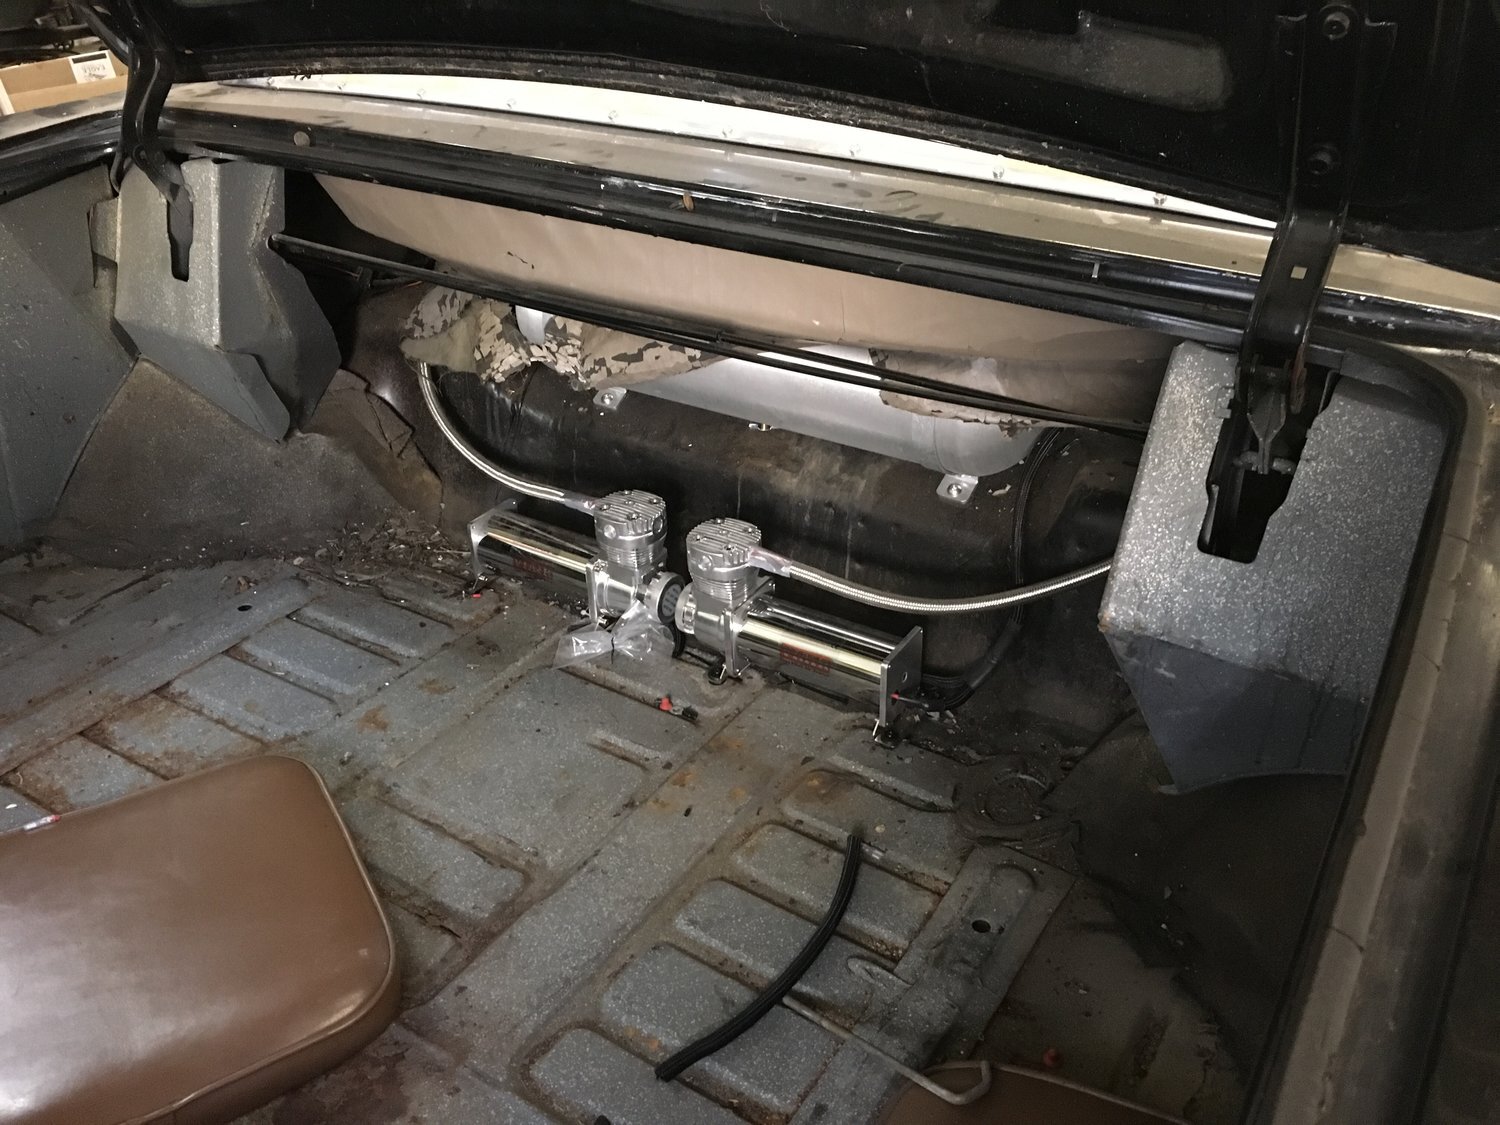 1965-cadillac-interior-minneapolis-car-restoration-hot-rod-factory.jpeg